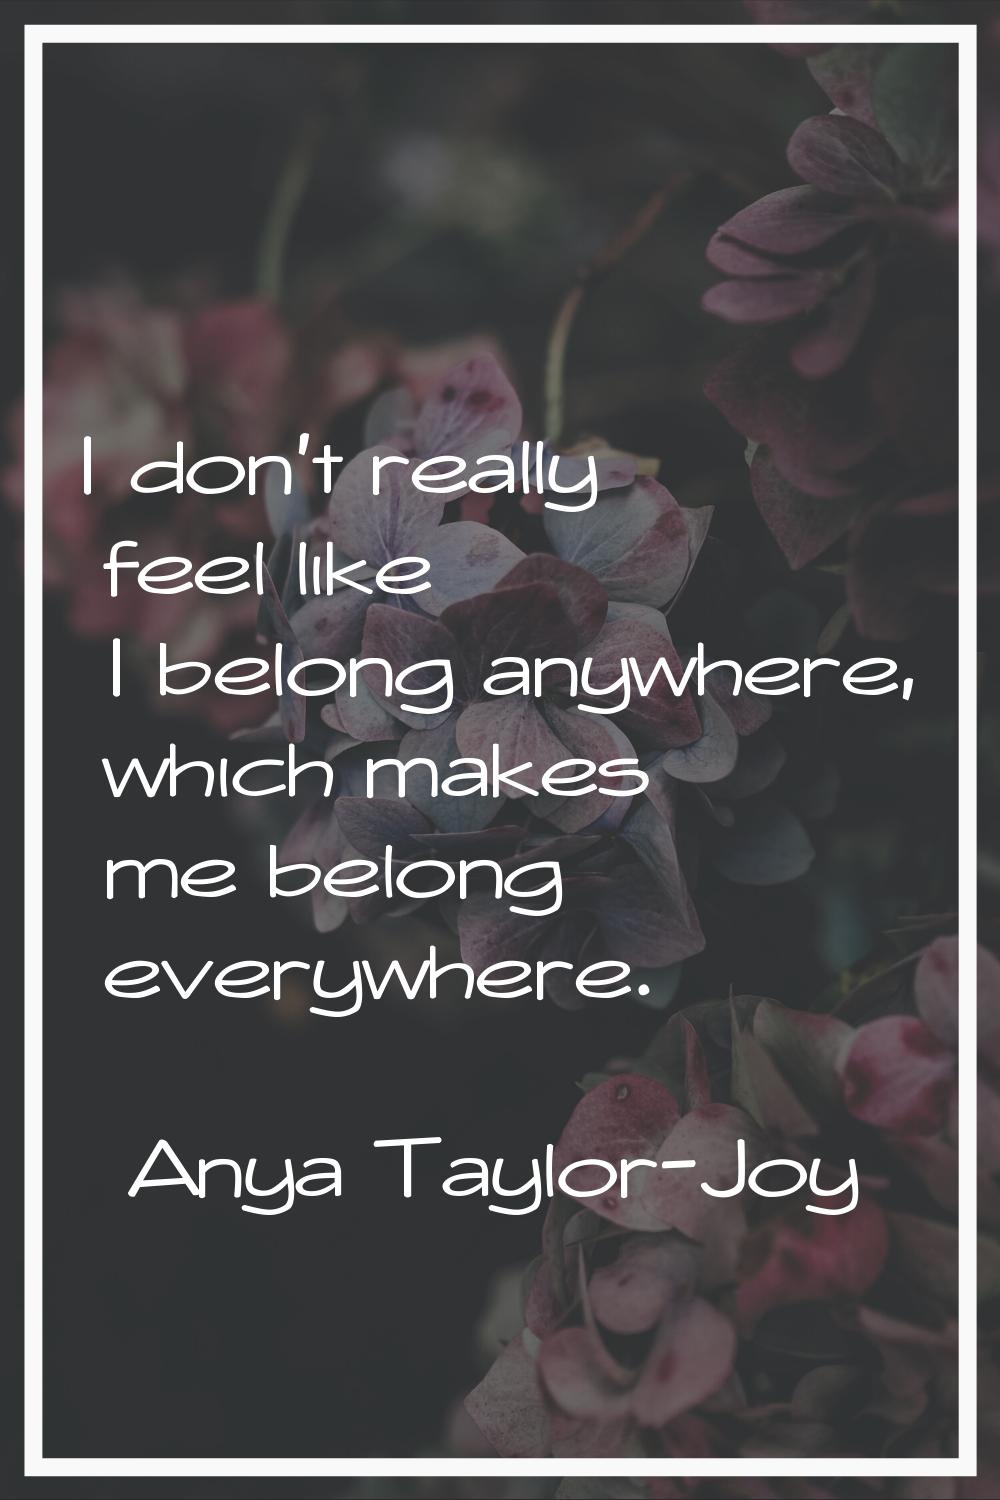 I don't really feel like I belong anywhere, which makes me belong everywhere.